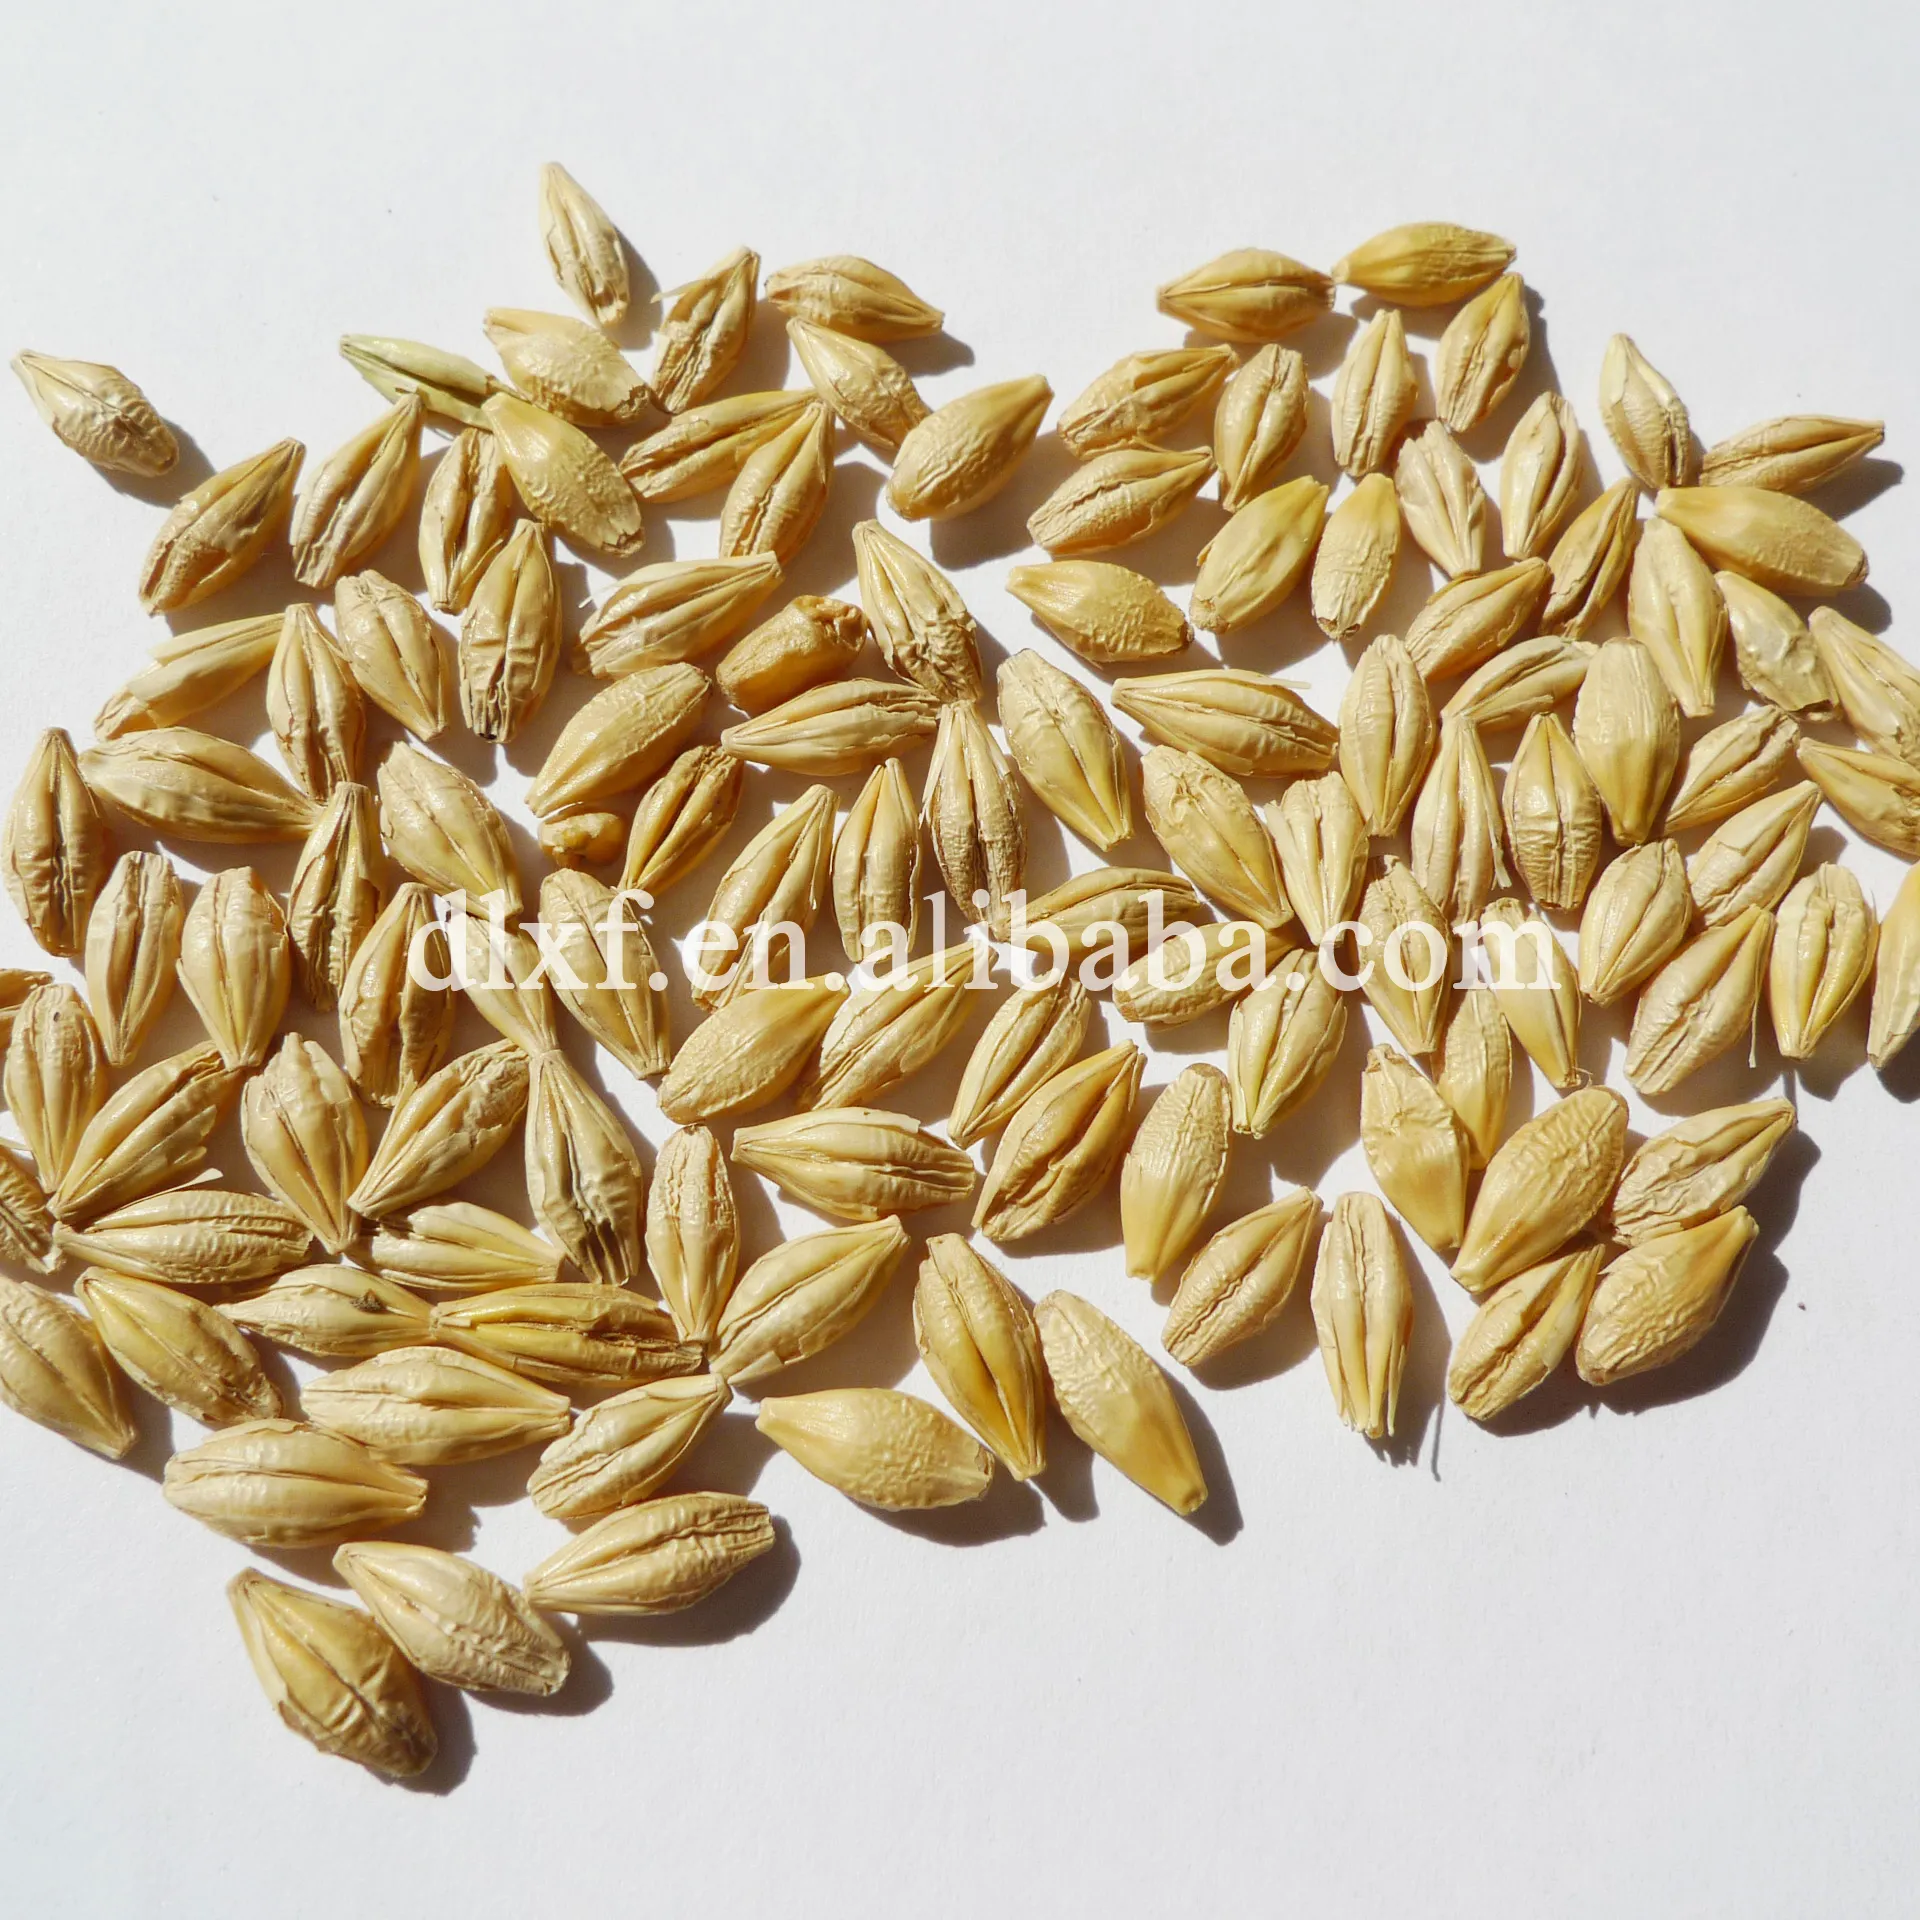 wholesale barley for human consumption